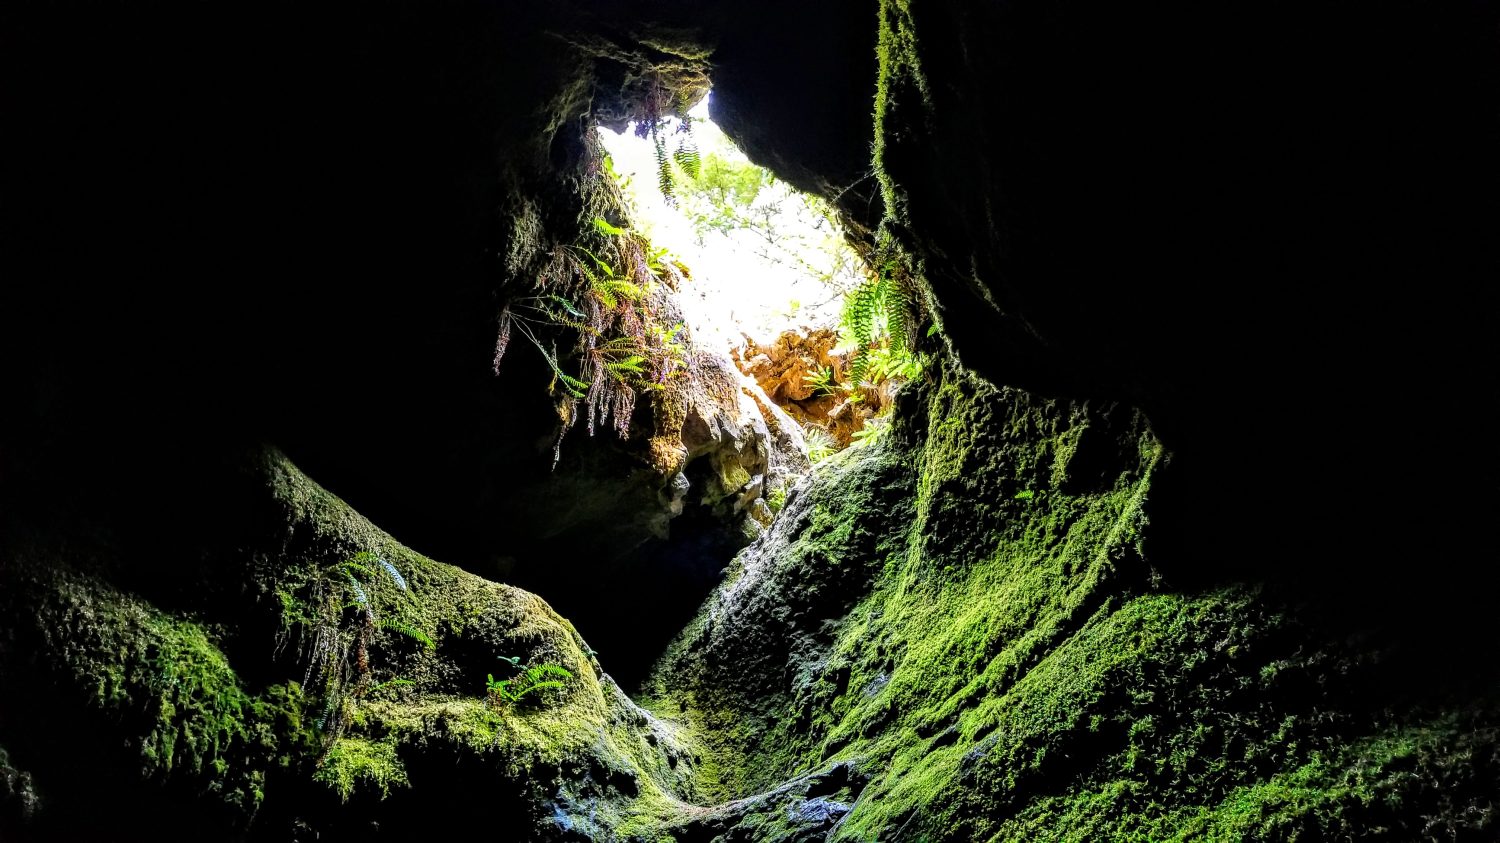 Cave opening at Ape Caves Washington